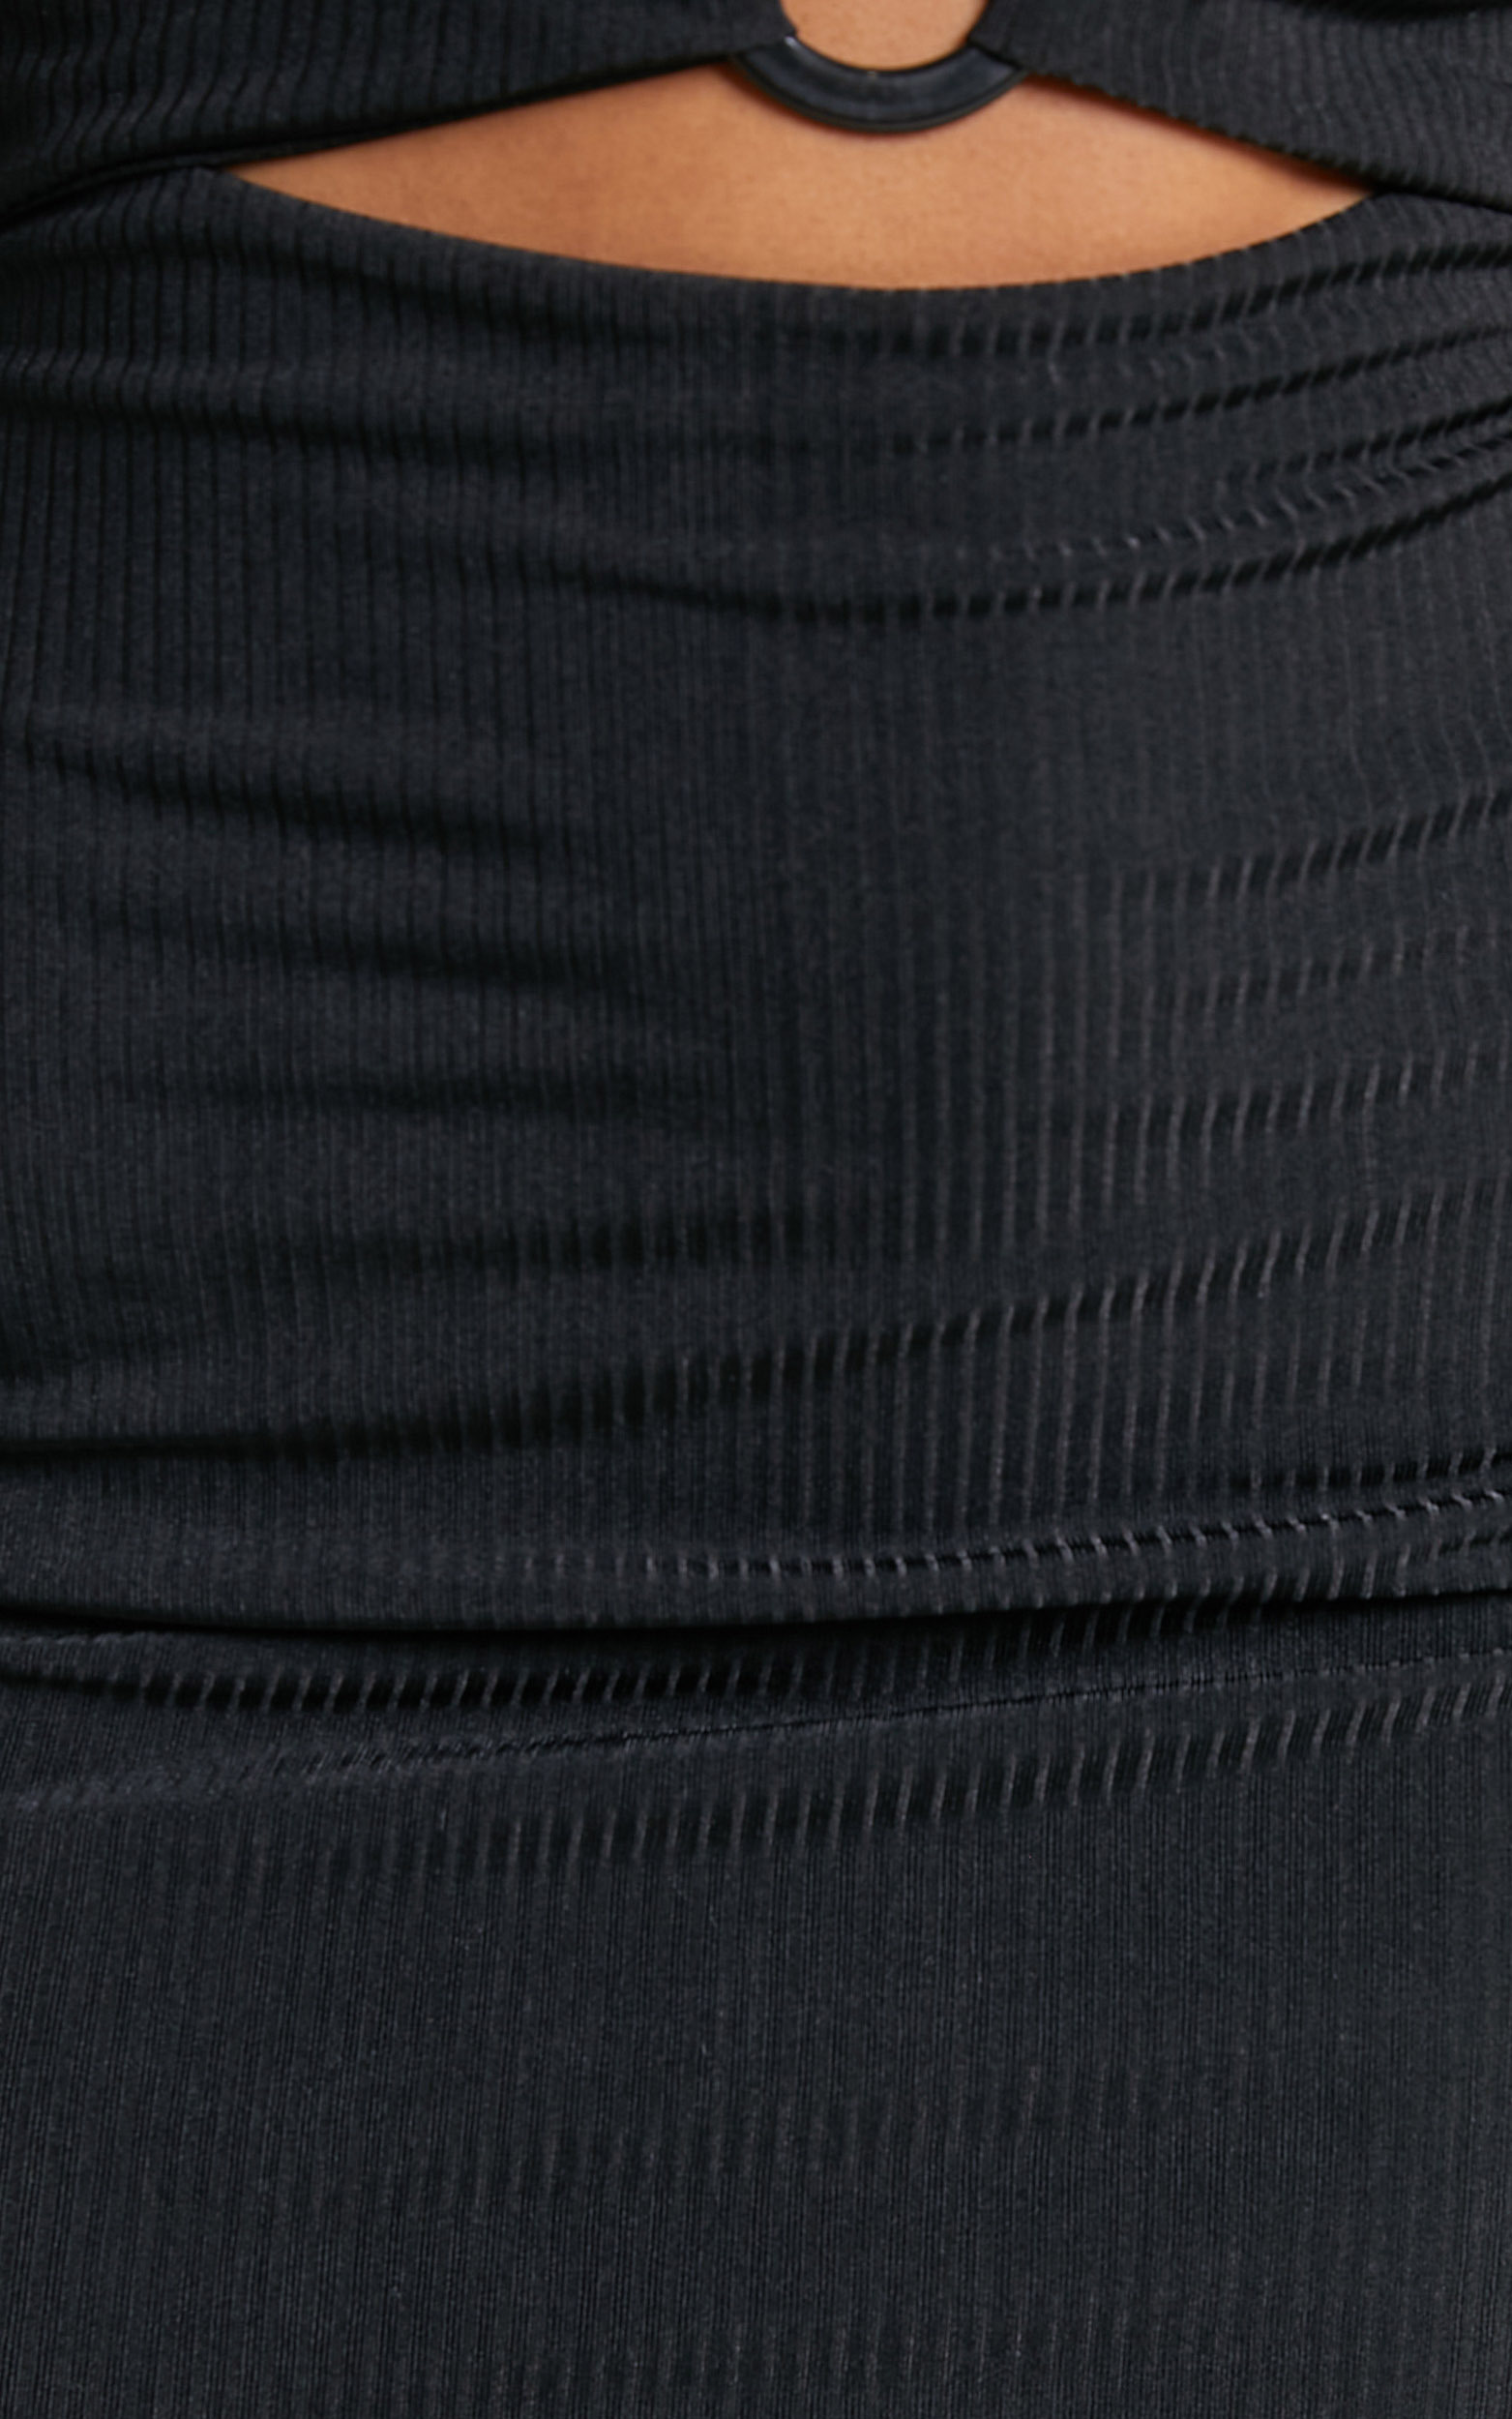 Assyria Ring Centre Cut Out Strapless Mini Dress in Black | Showpo